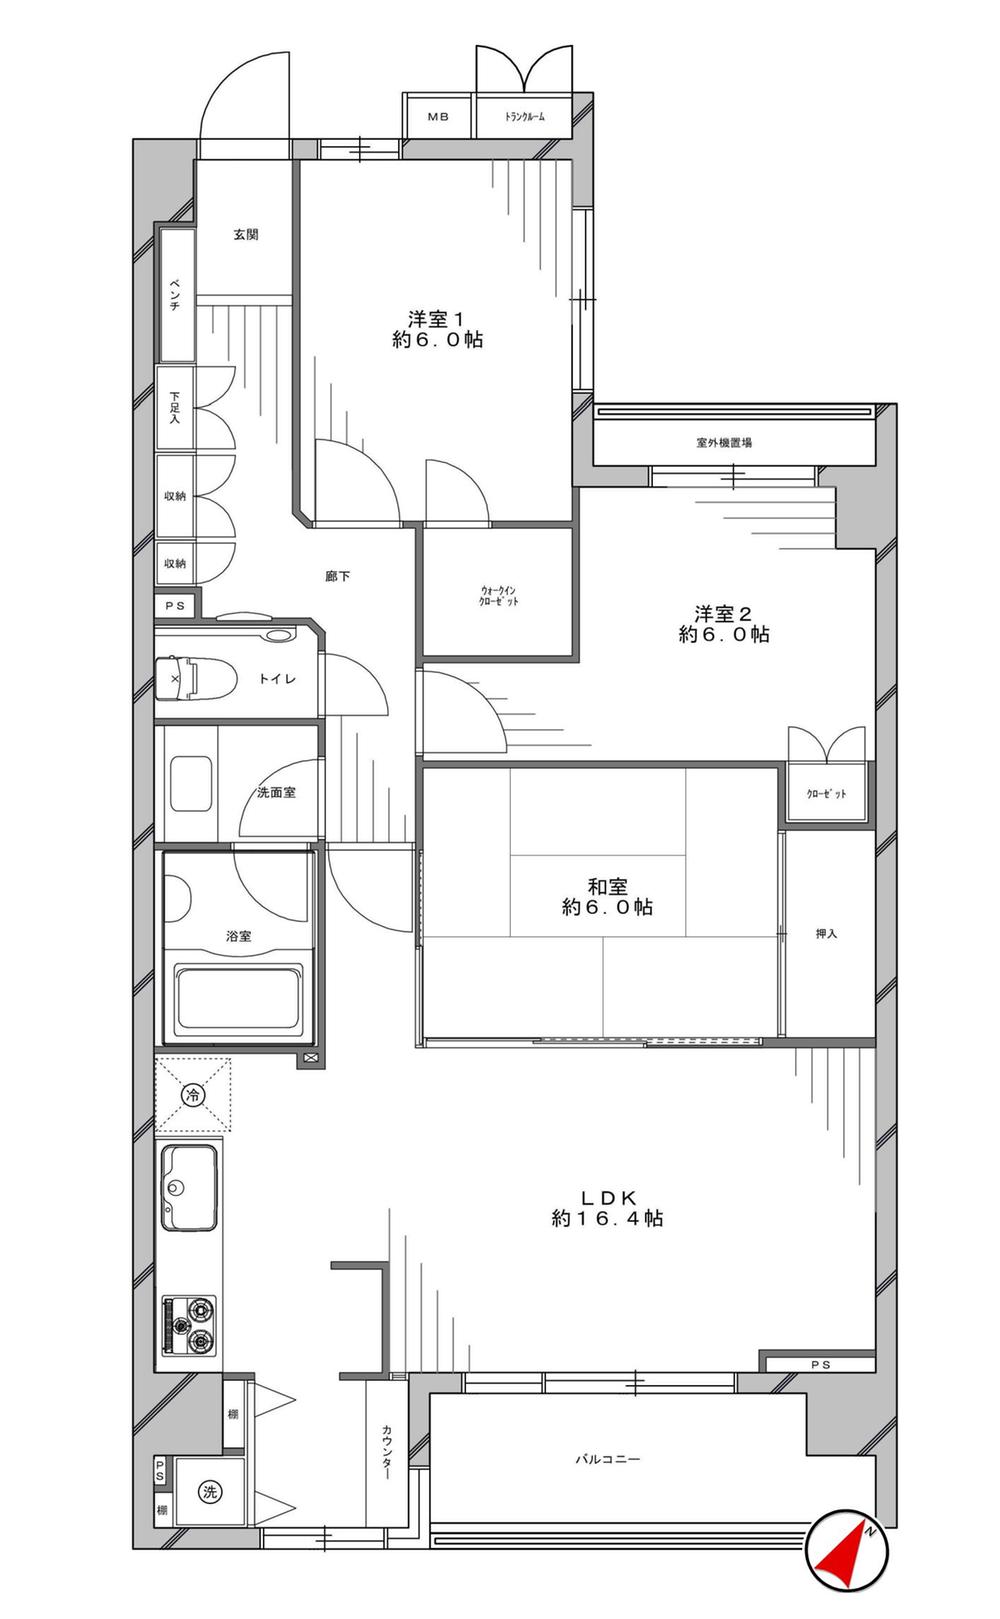 Floor plan. 3LDK, Price 34,800,000 yen, Occupied area 78.94 sq m , Balcony area 6.6 sq m